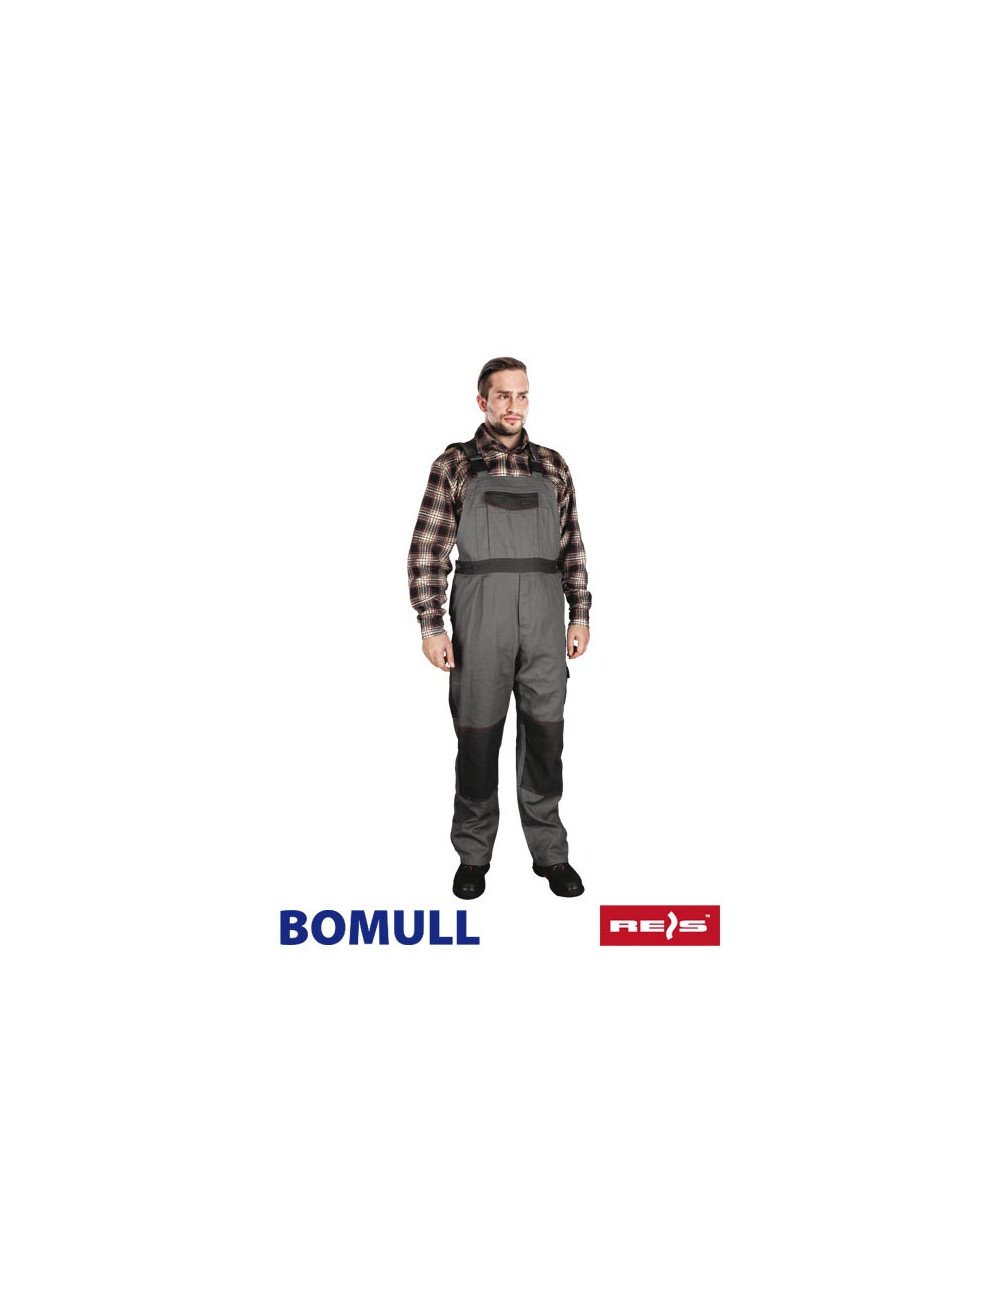 Protective bib pants bomull-b sds gray/dark gray Reis